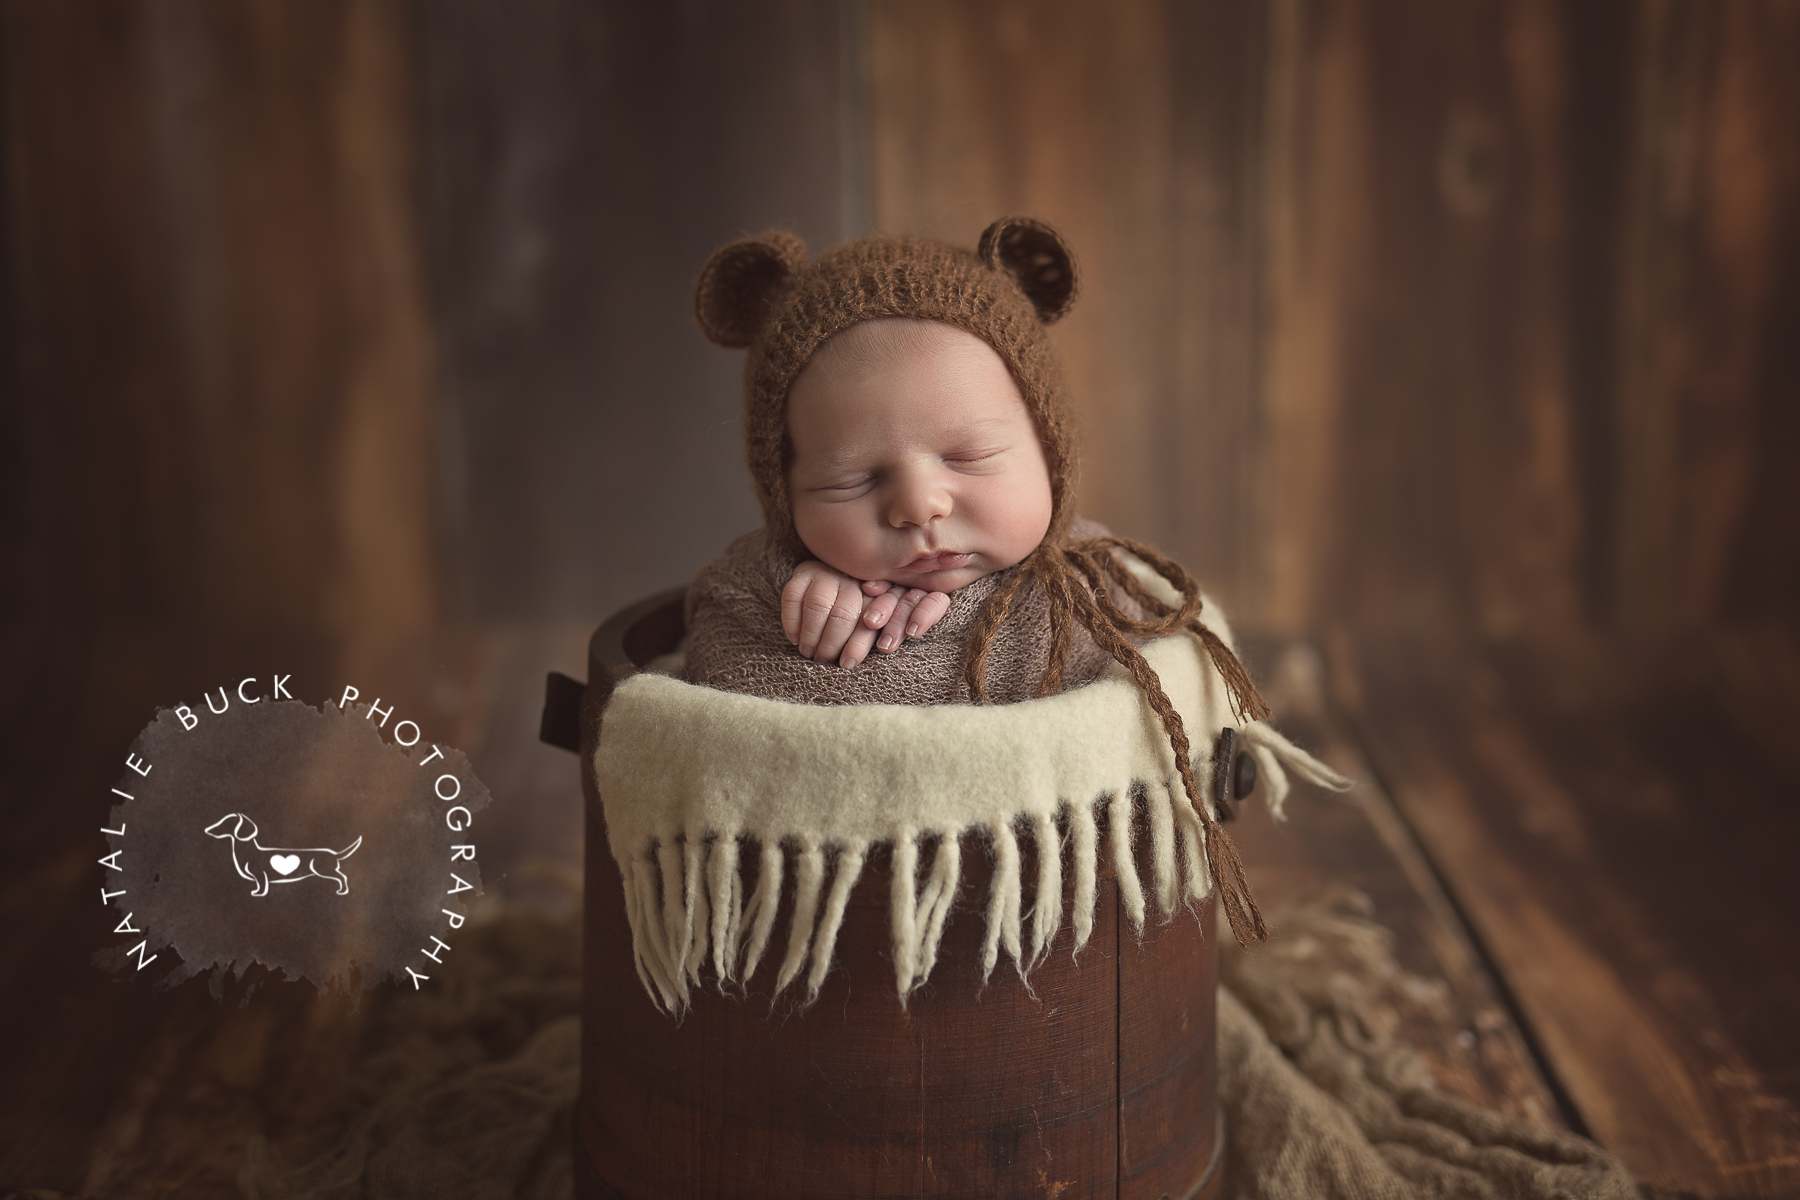 Newborn Photographer CT - Natalie Buck Photography Newborn Photos